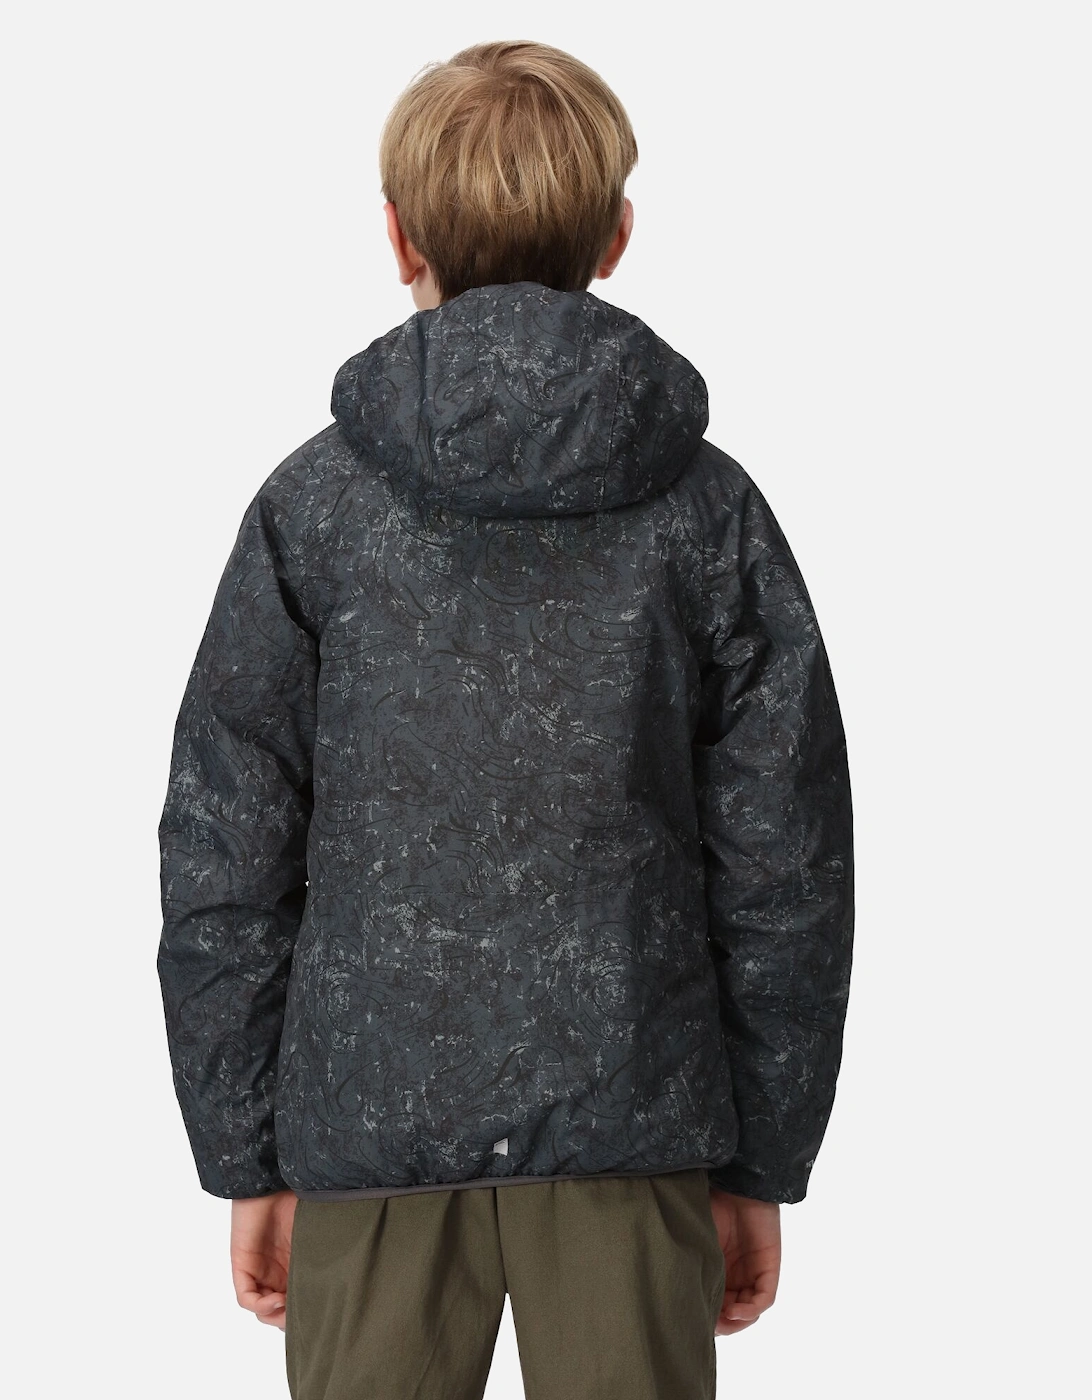 Childrens/Kids Volcanics VII Terrain Print Reflective Waterproof Jacket